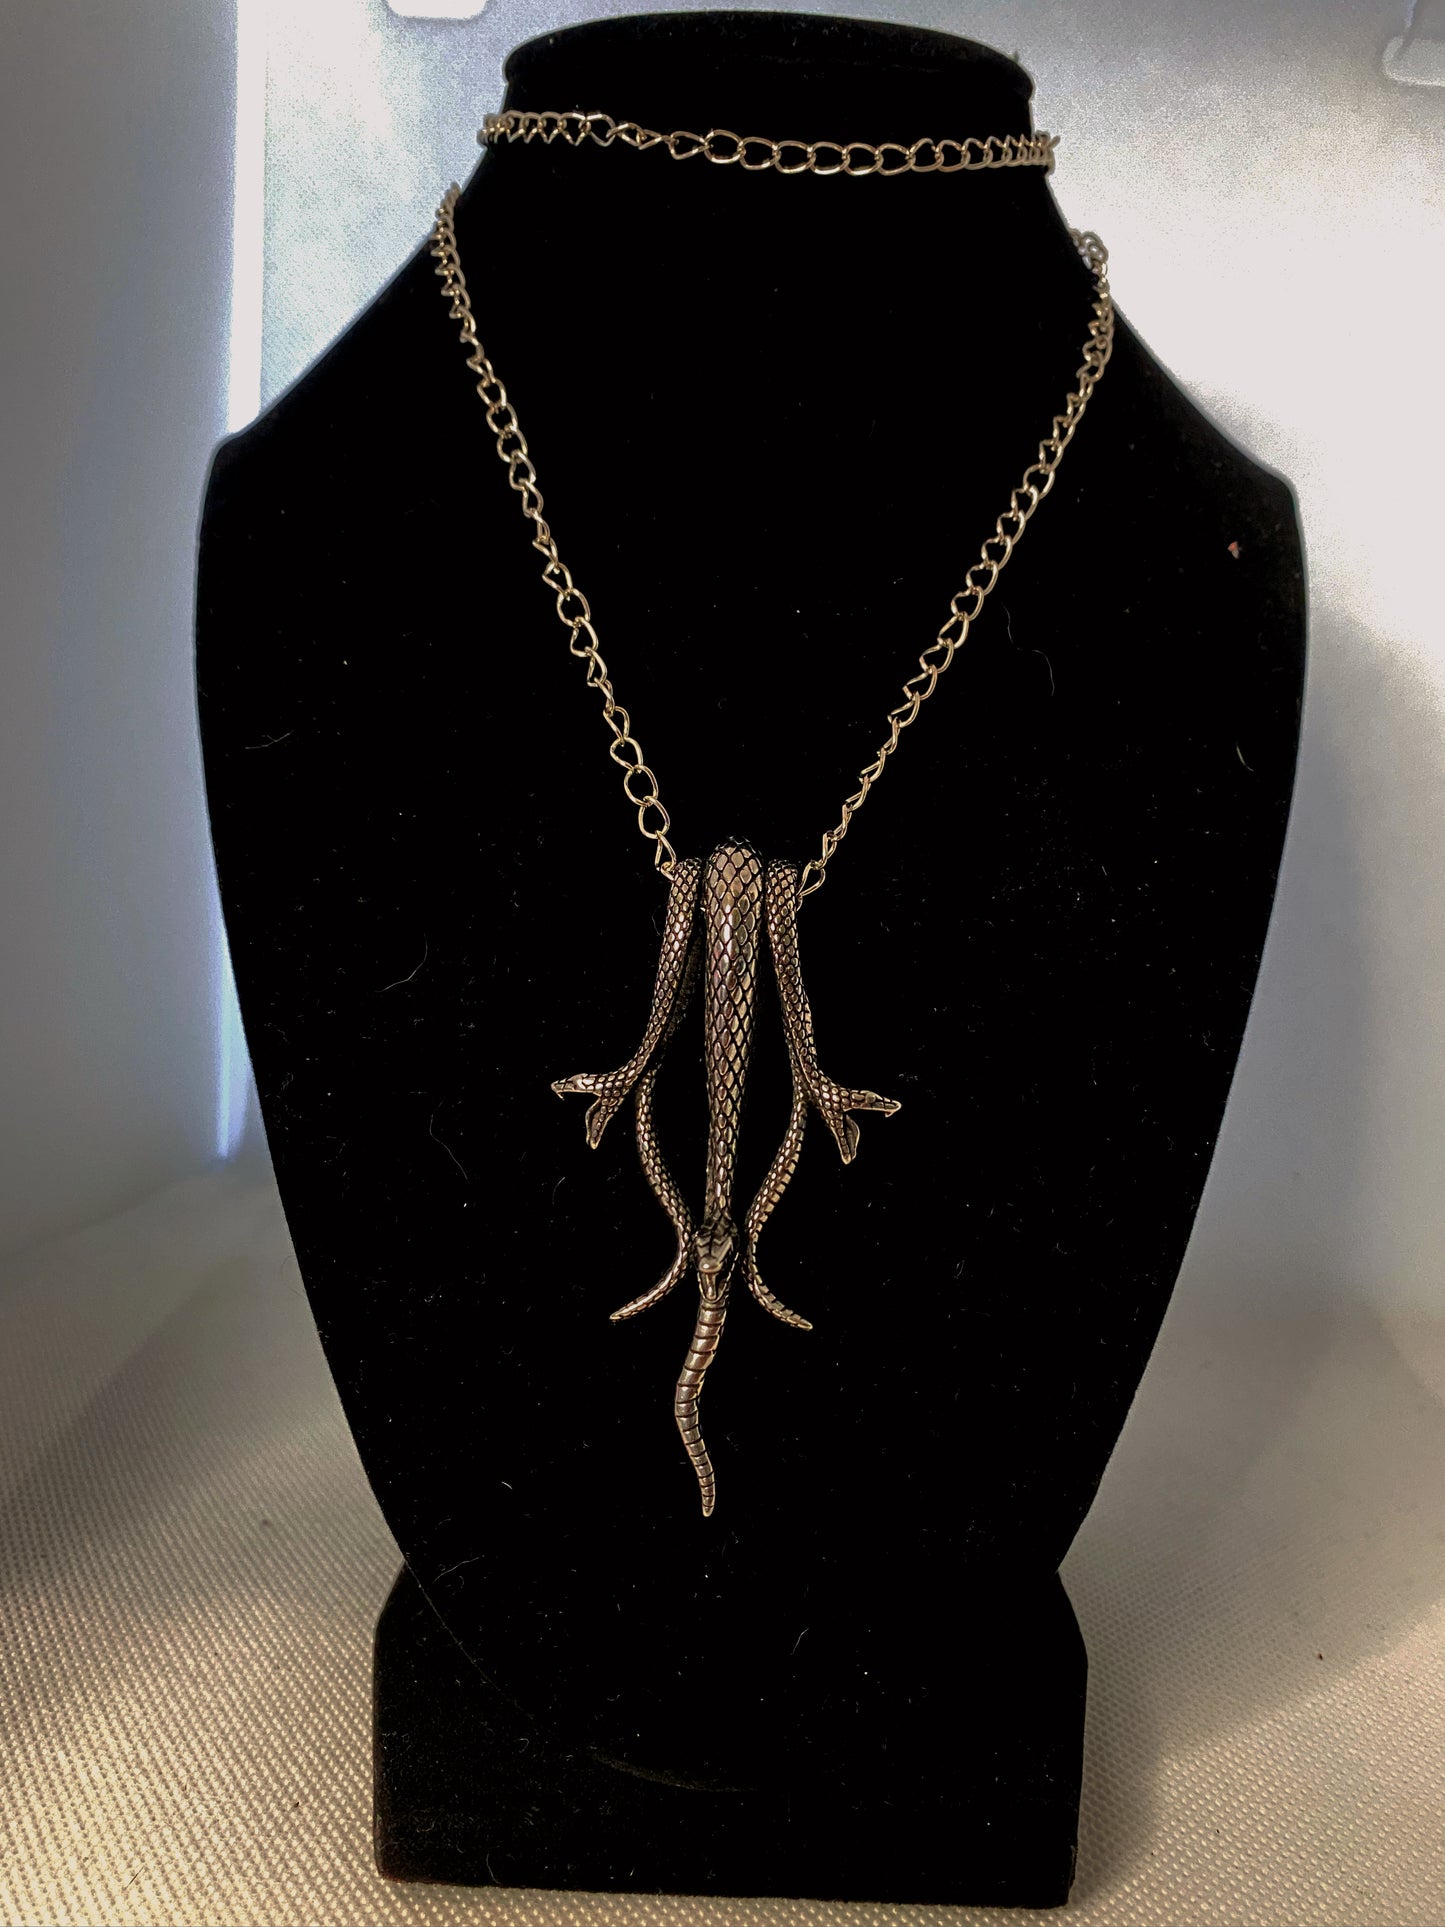 “Medusa” necklace